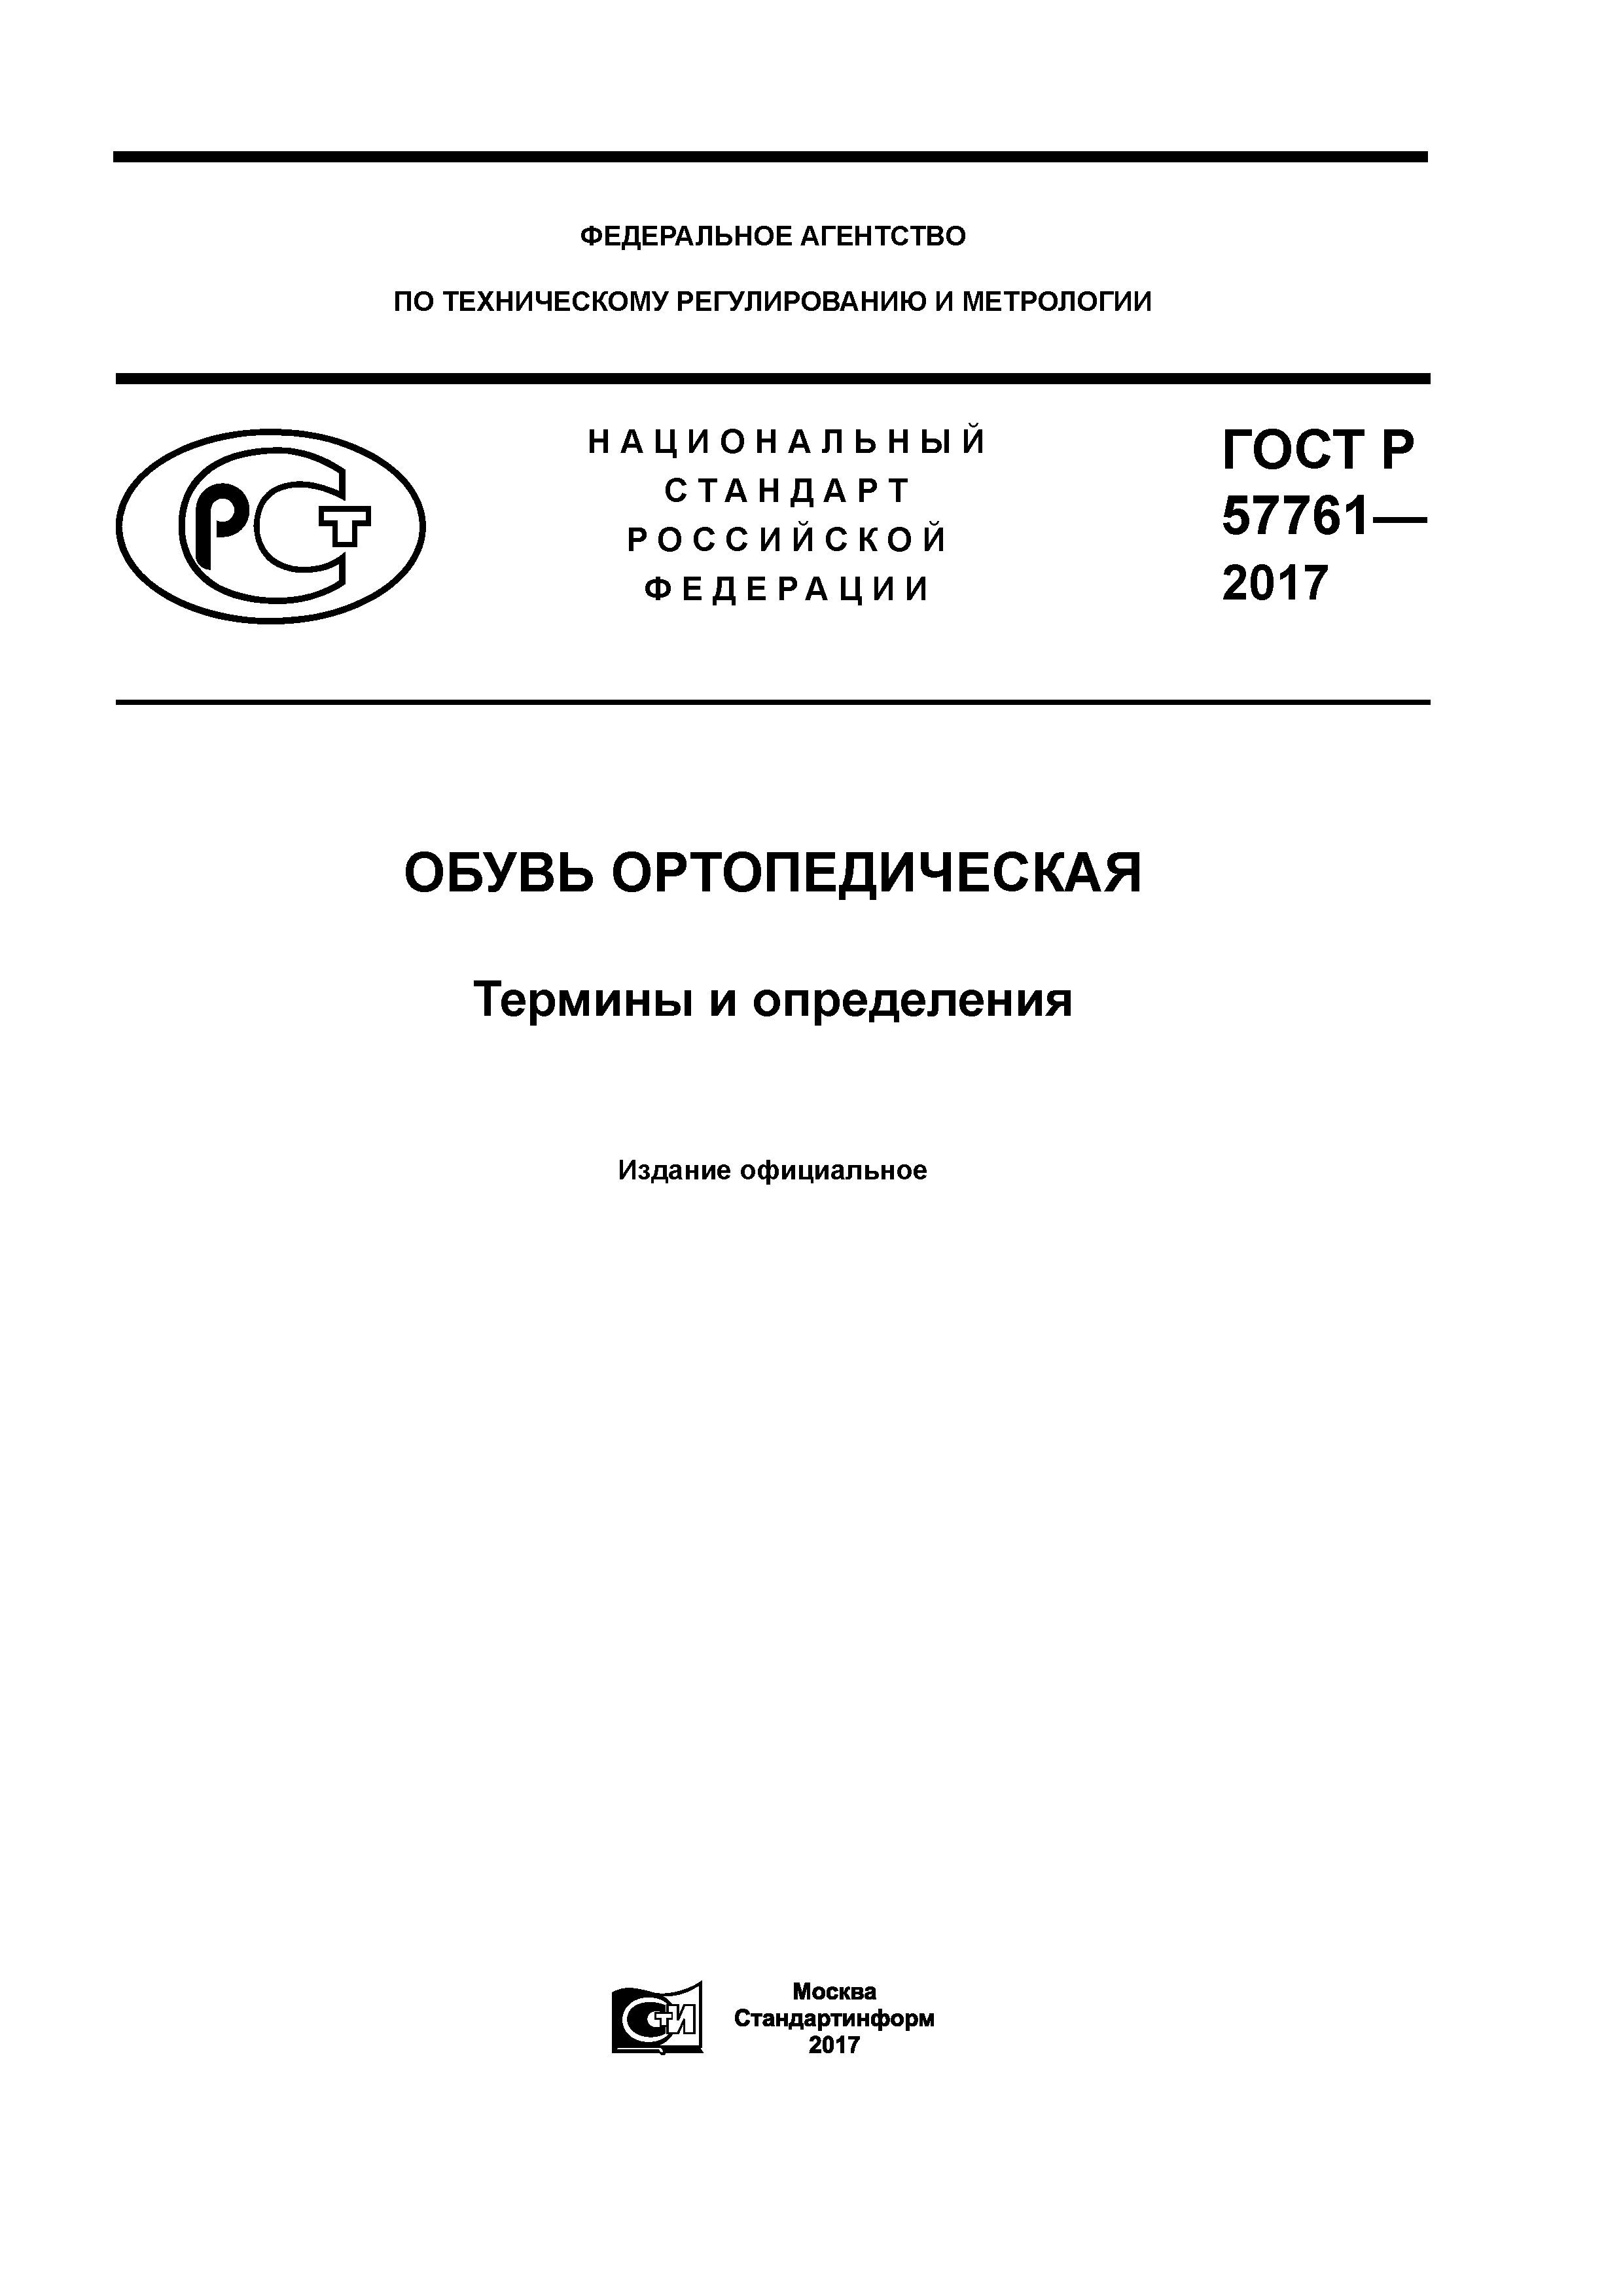 ГОСТ Р 57761-2017